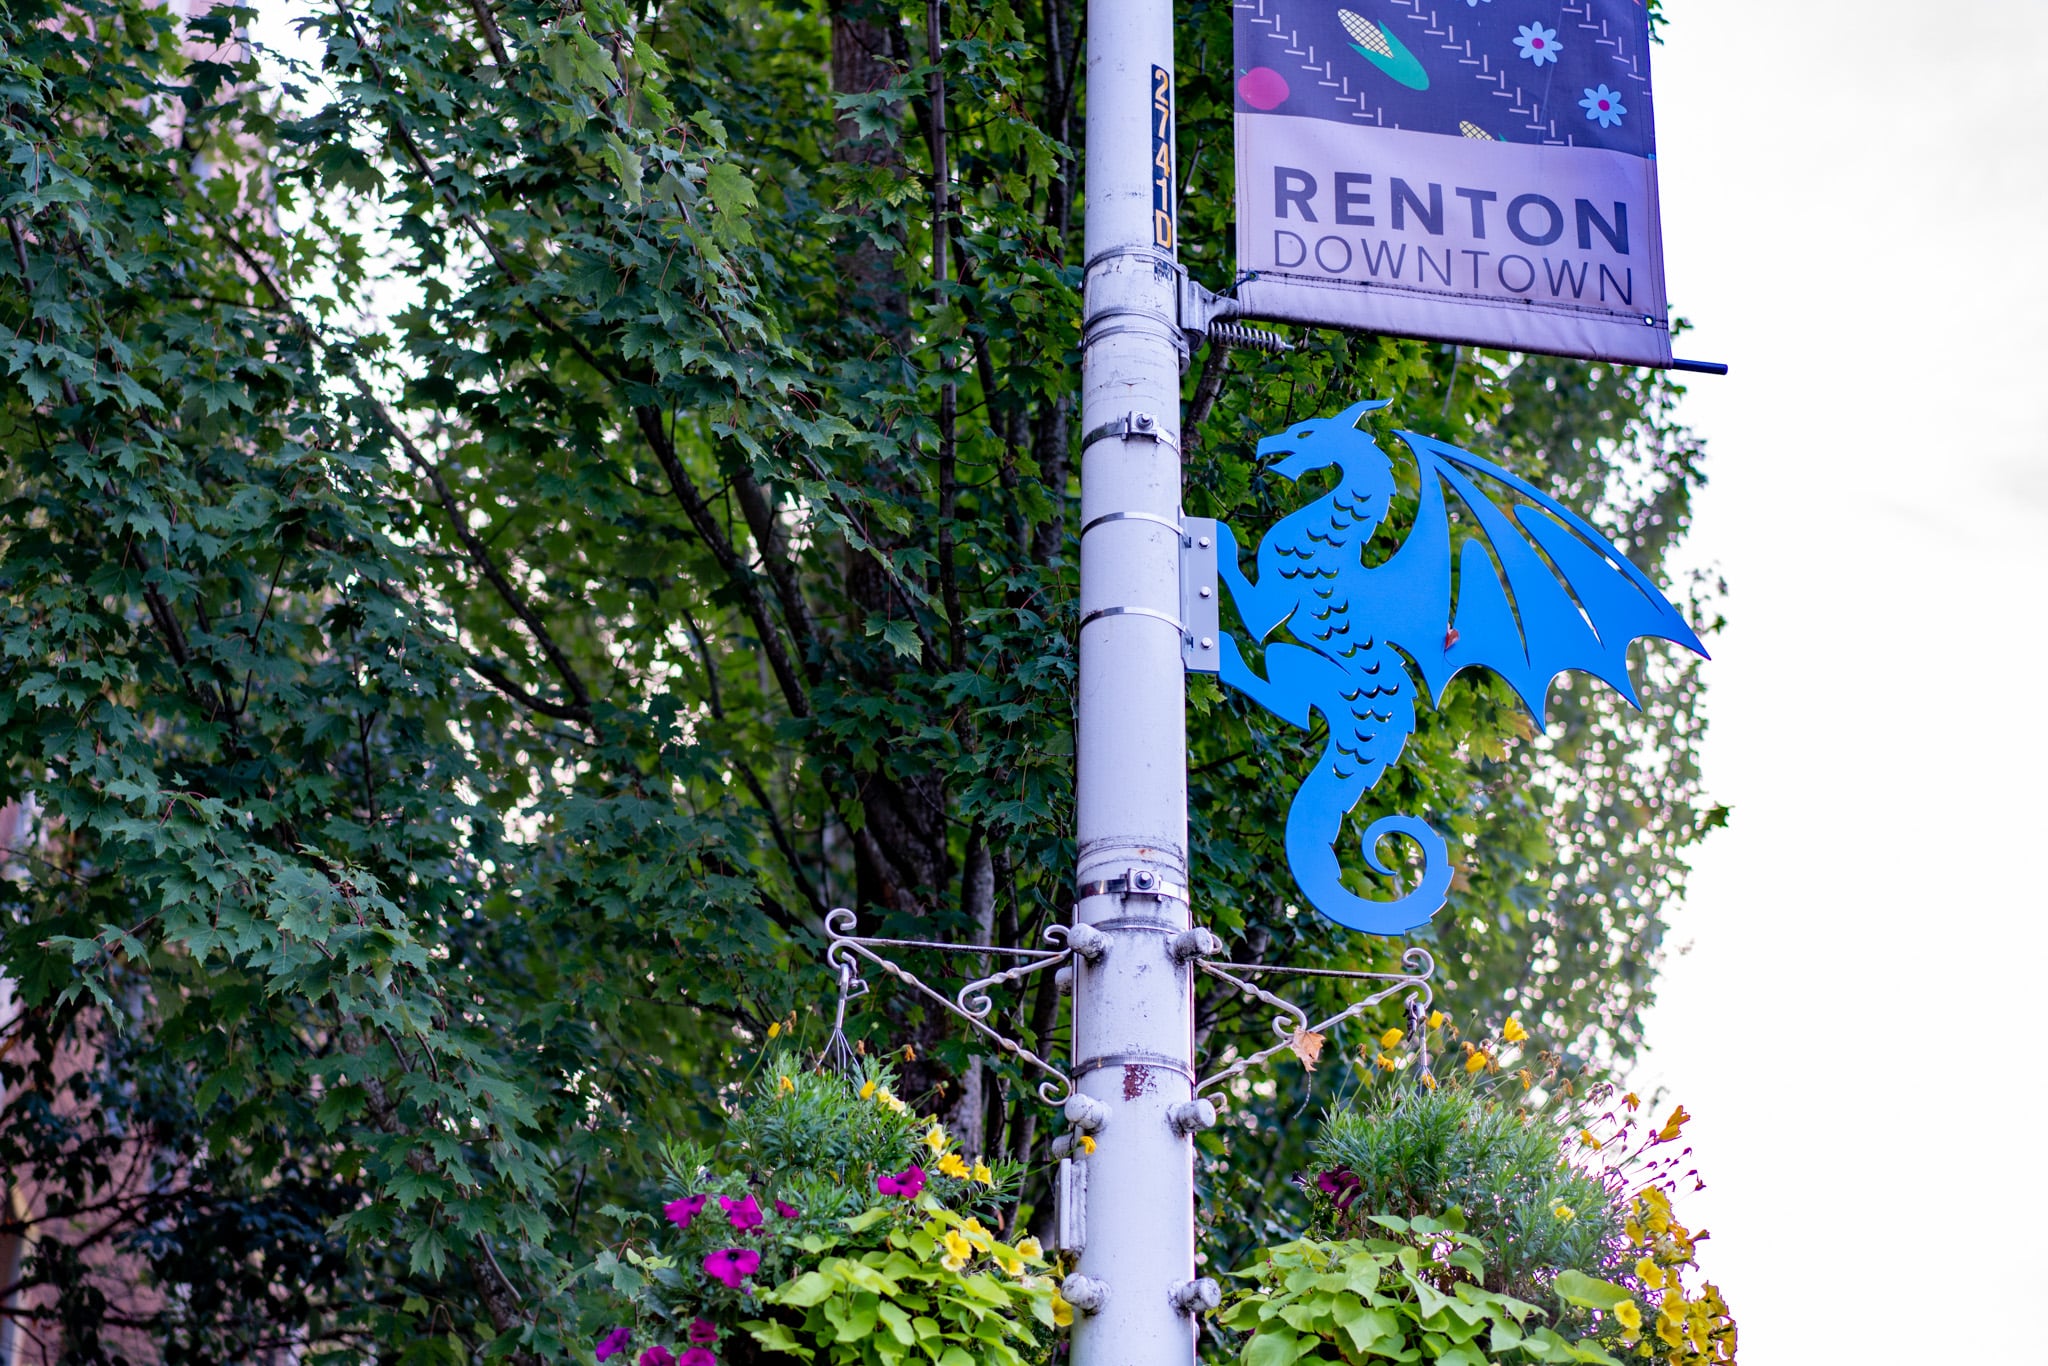 Blue metal dragon sculpture on a light pole in downtown Renton